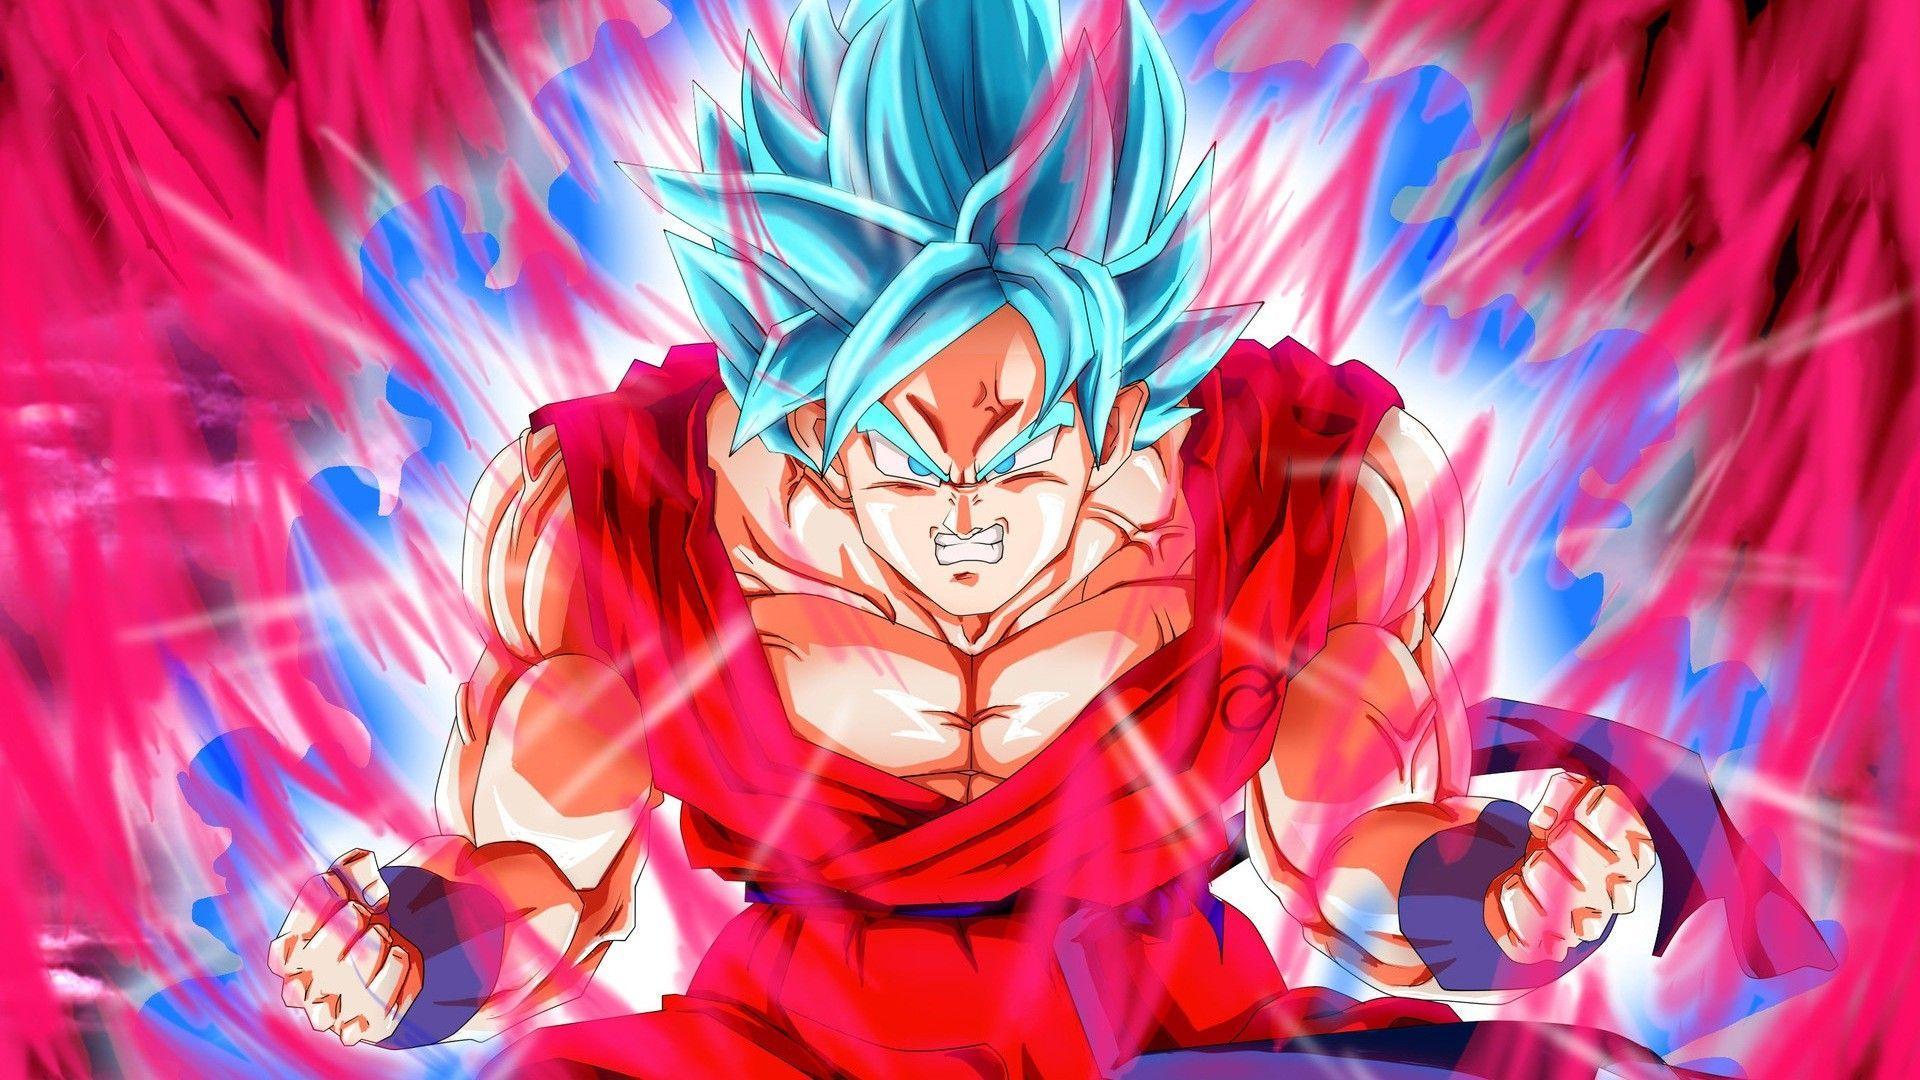 Goku Wallpaper Super Saiyan Blue. Dragon ball super